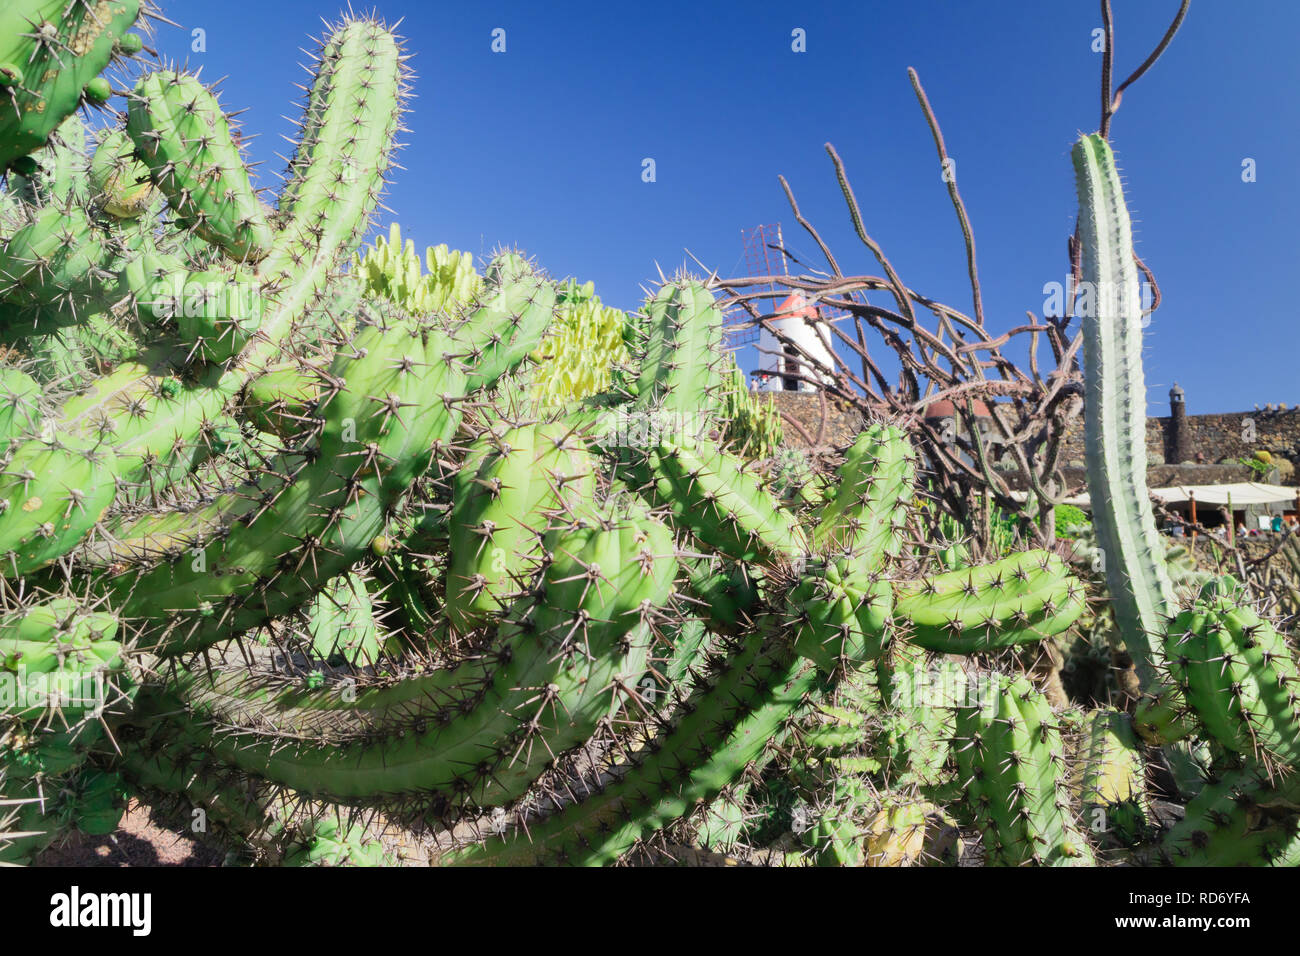 Popular Tourists location Jardin de Cactus (Cactus Garden) in Guatiza, Lanzarote, Canary Islands, Las Palmas, Spain Stock Photo